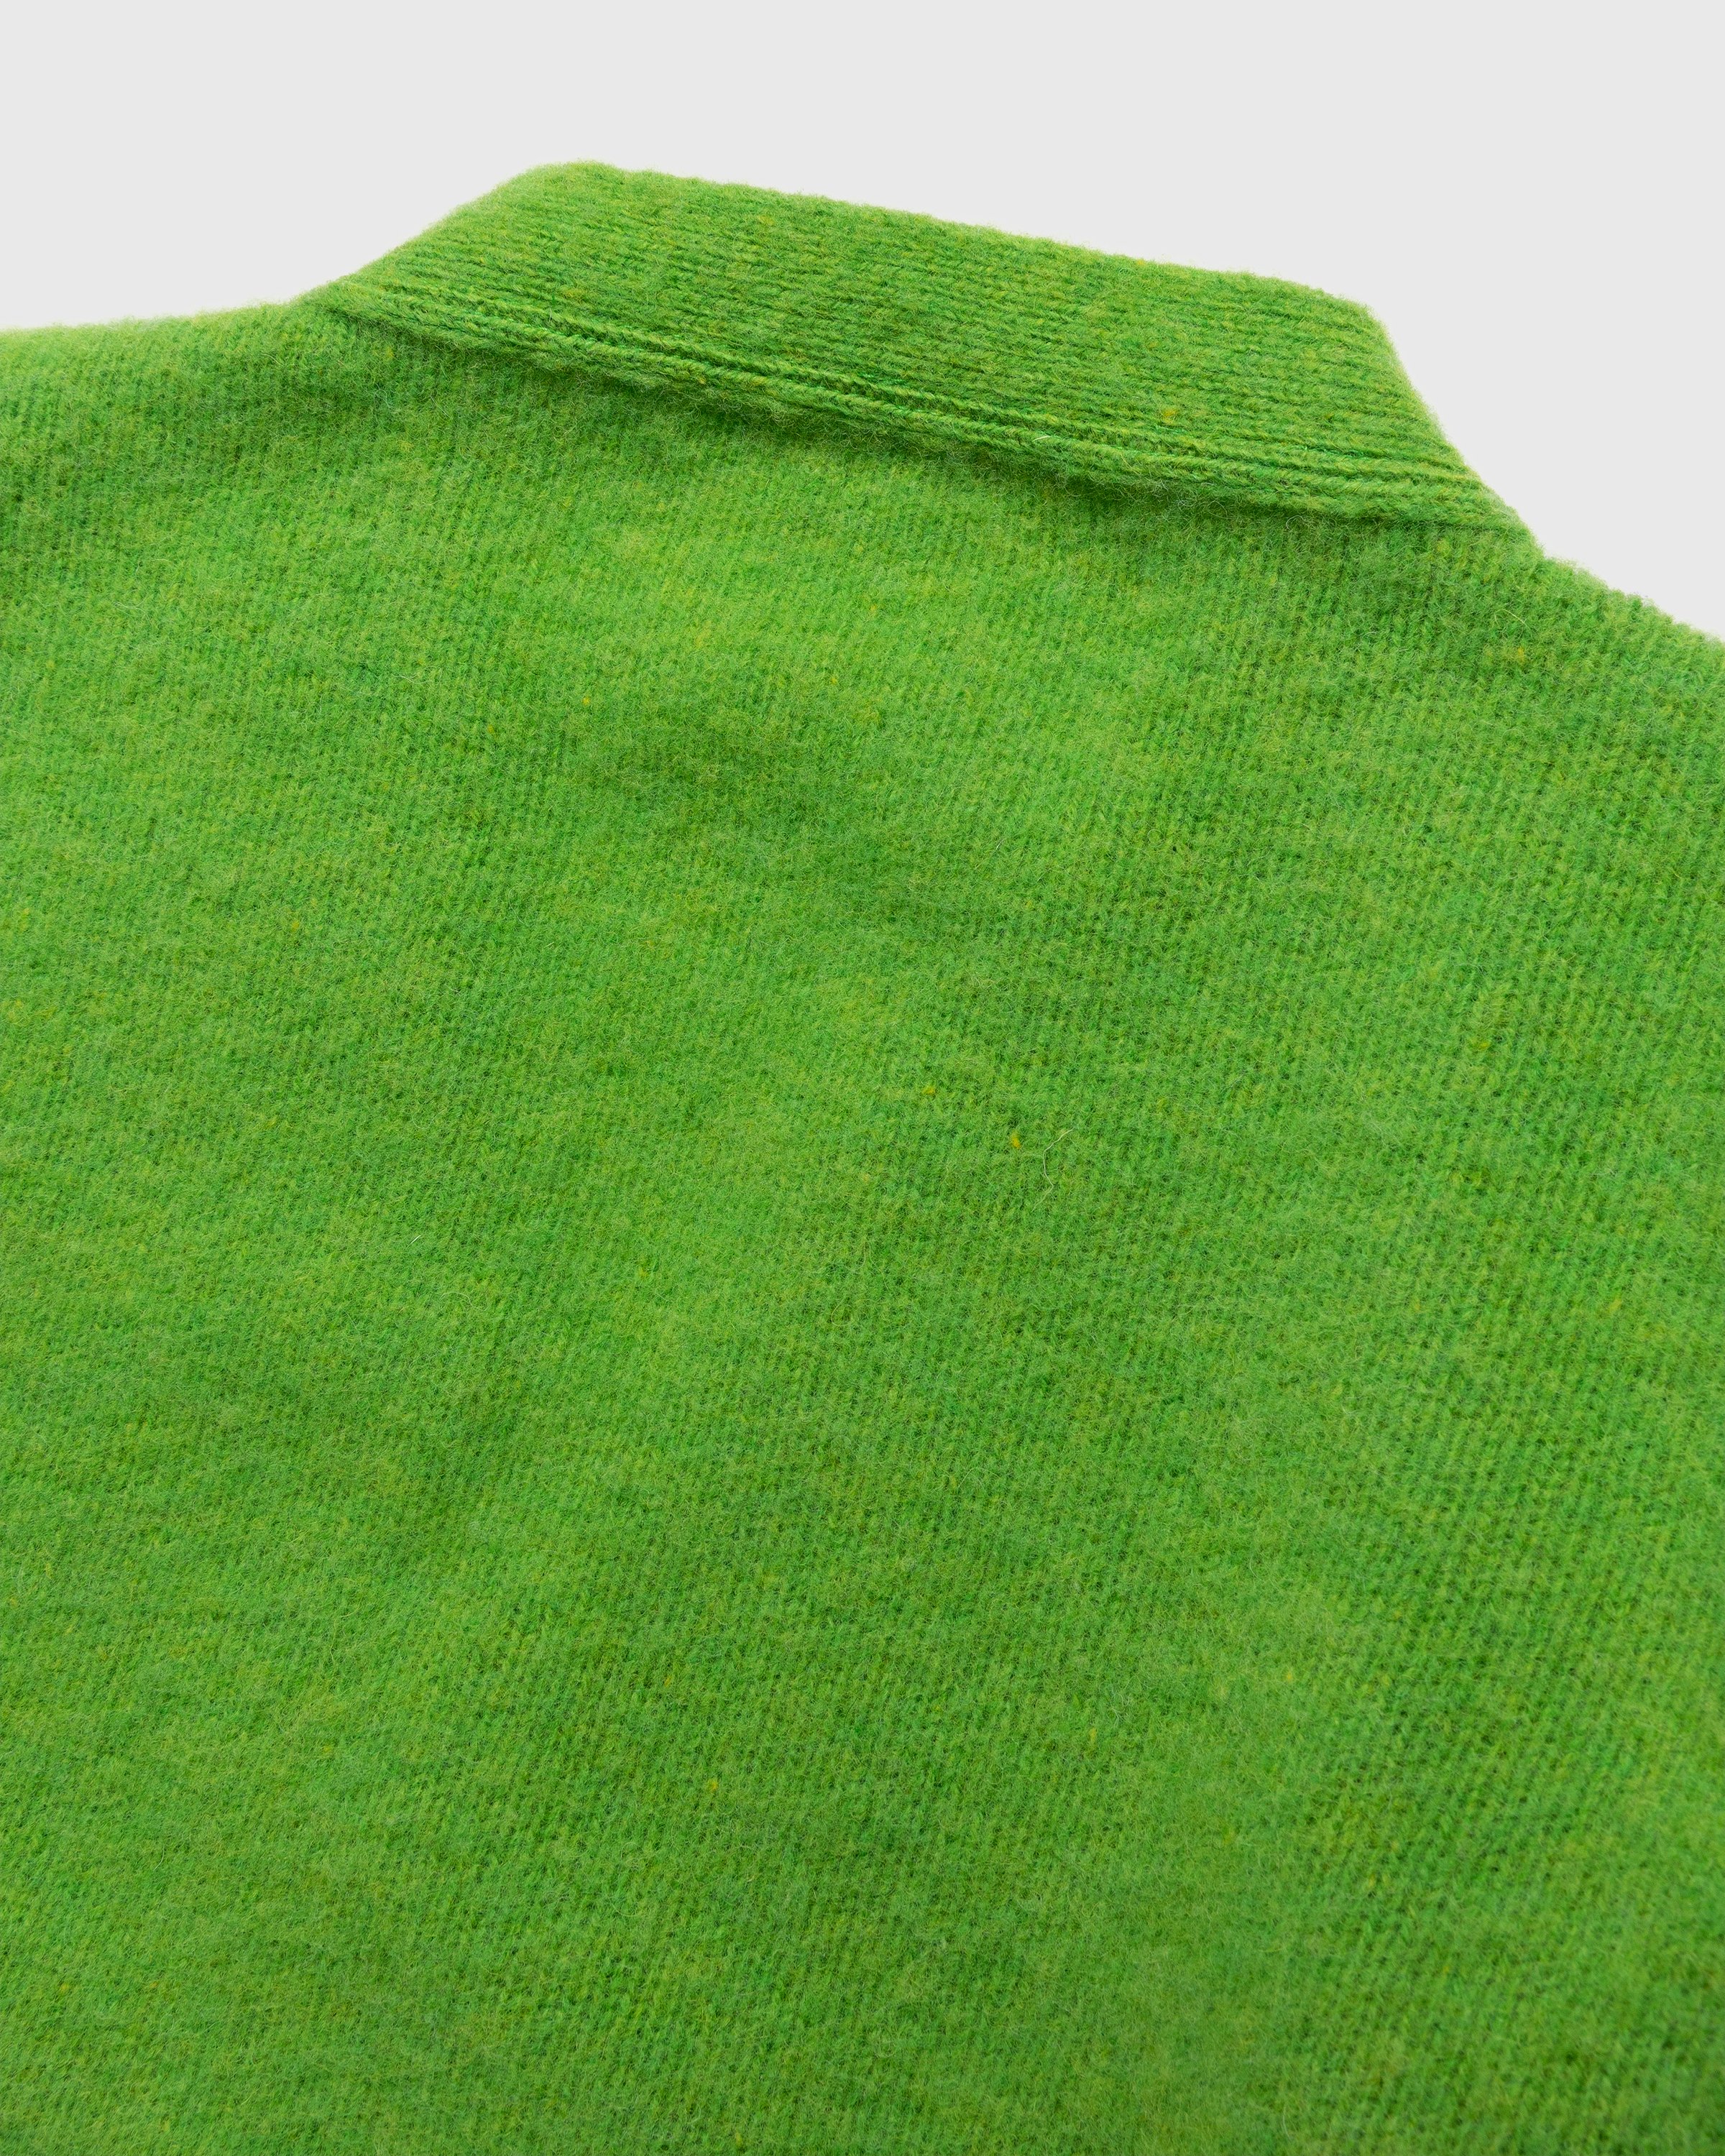 J. Press x Highsnobiety - Shaggy Dog Cardigan Green - Clothing - Green - Image 4